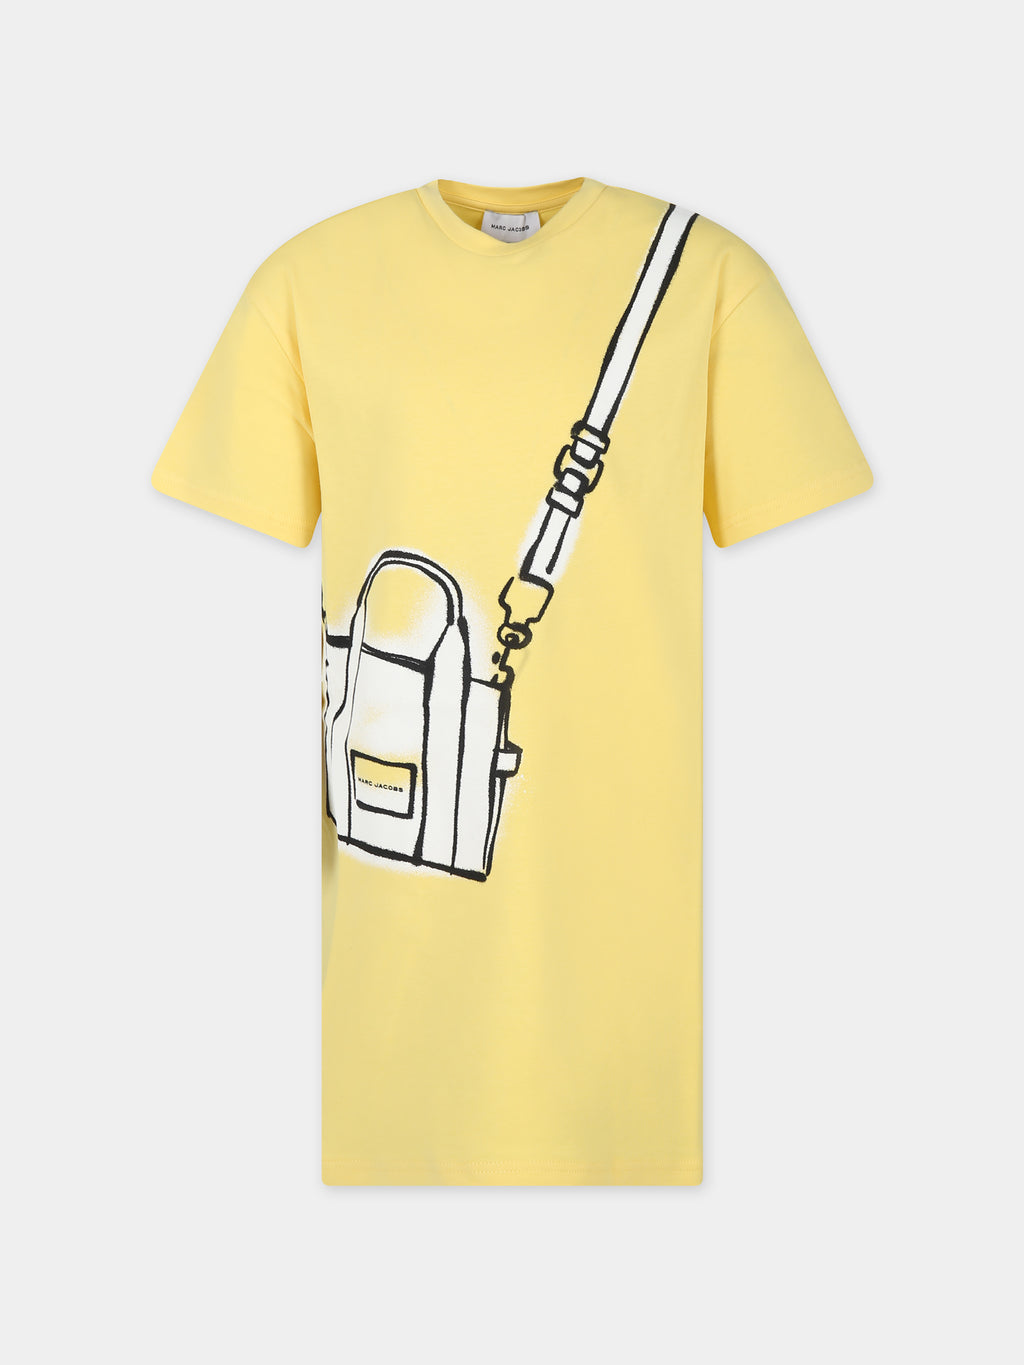 Vestito giallo per bambina con stampa borsa e logo